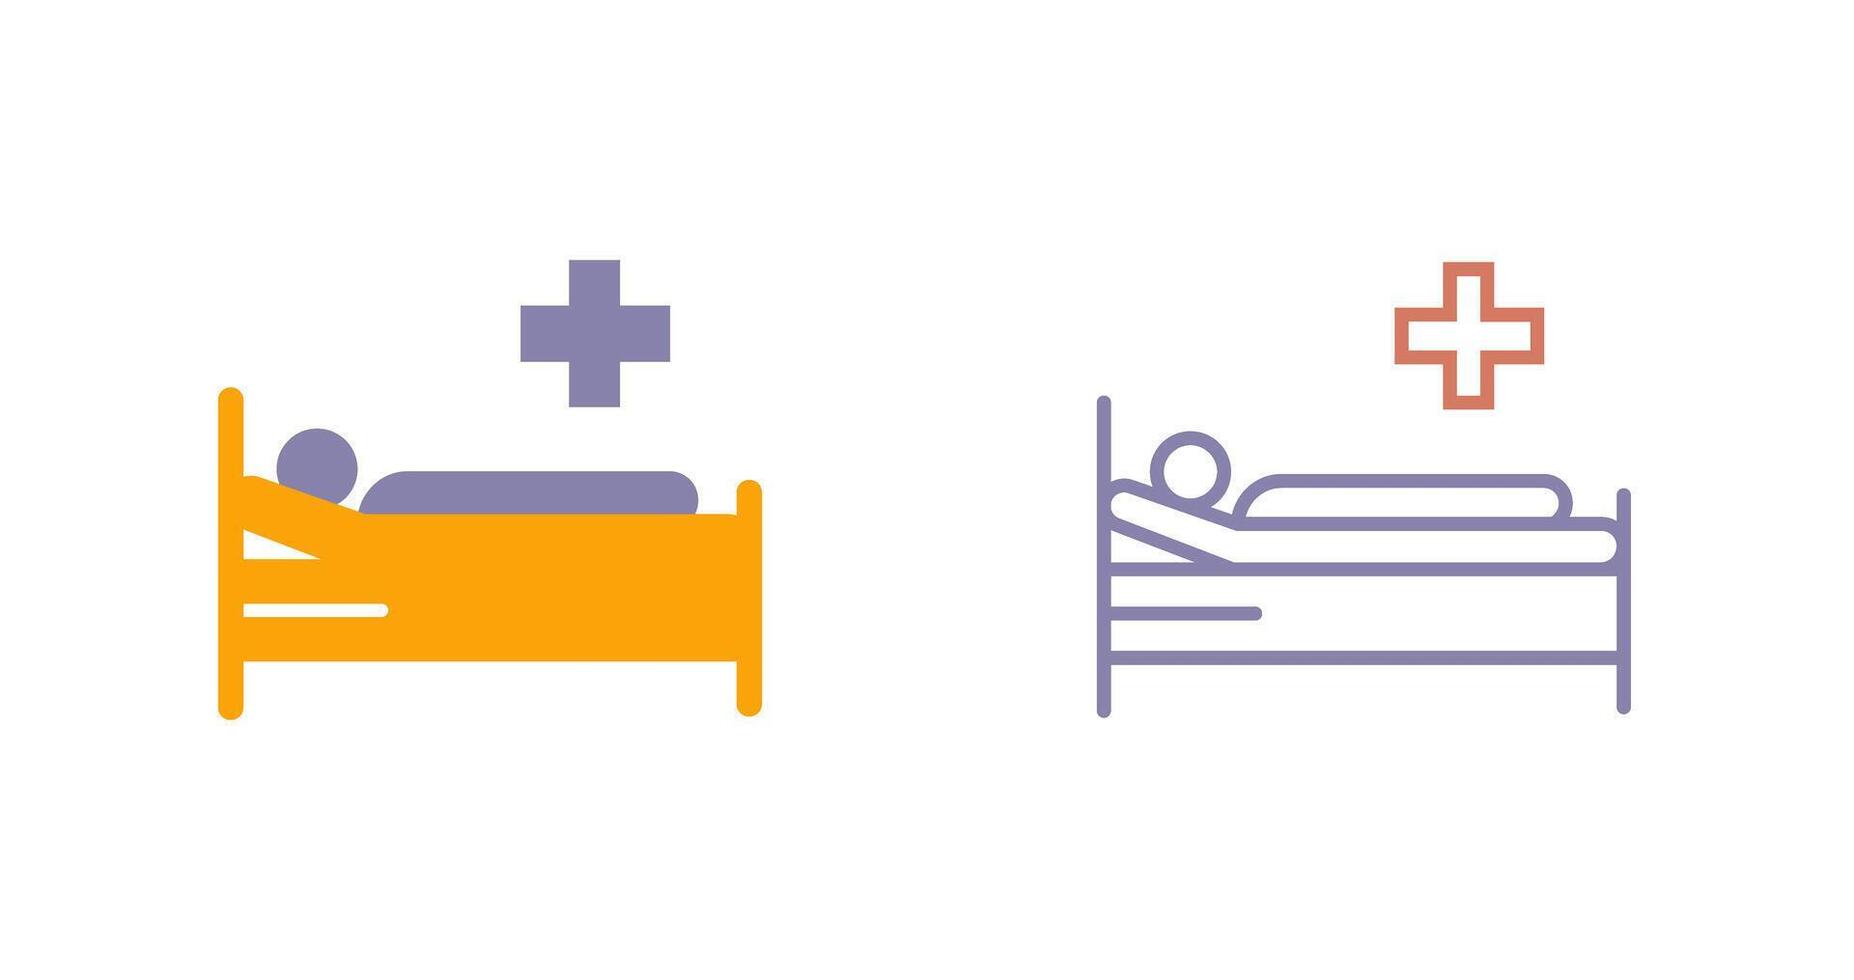 Patient Bed Icon vector